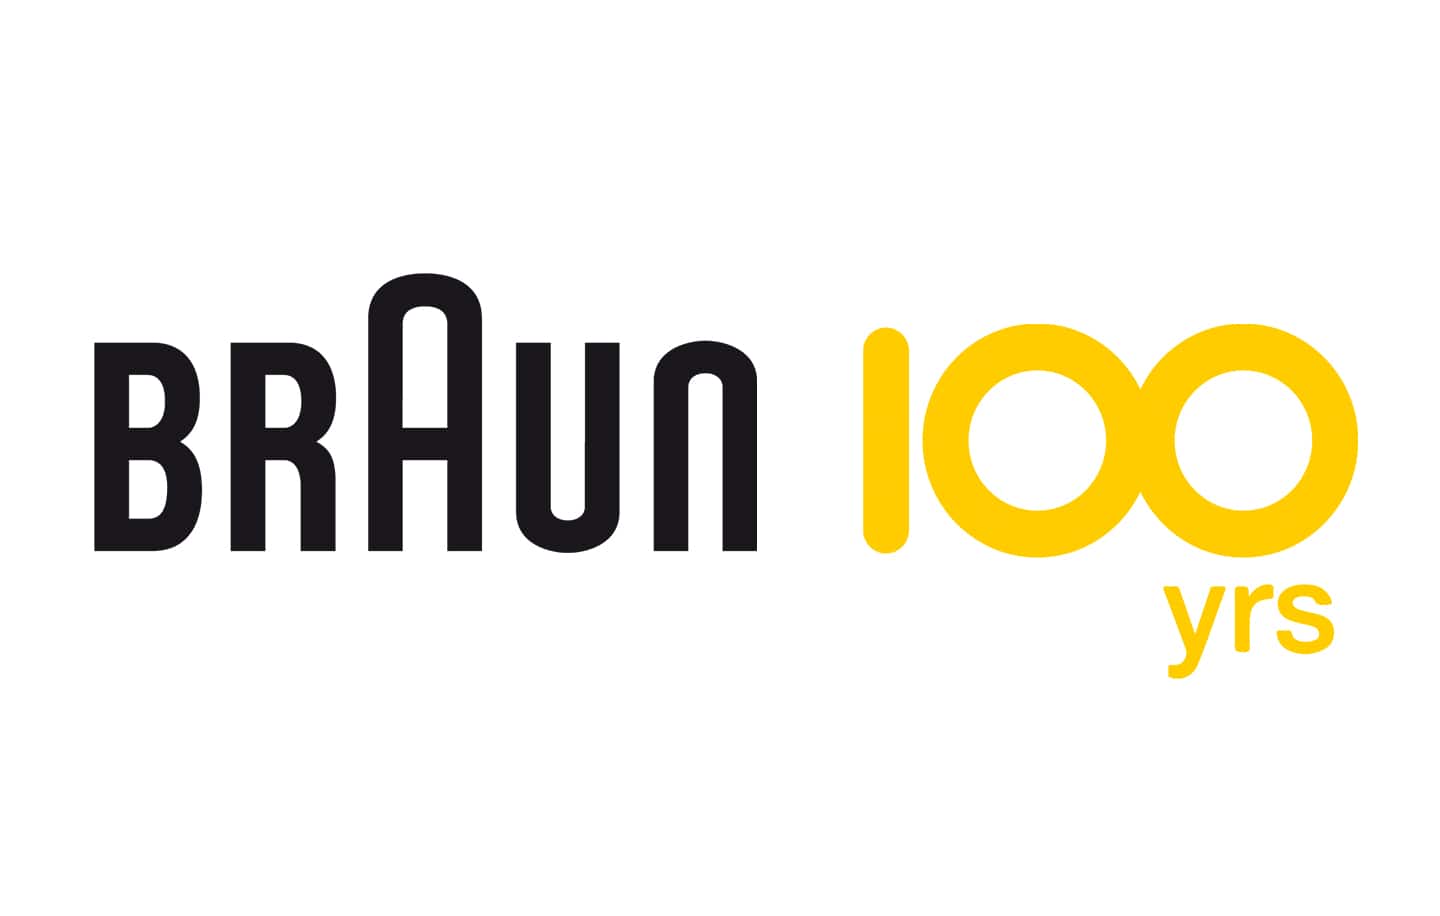 Braun 100 years – Good Design can make lives better